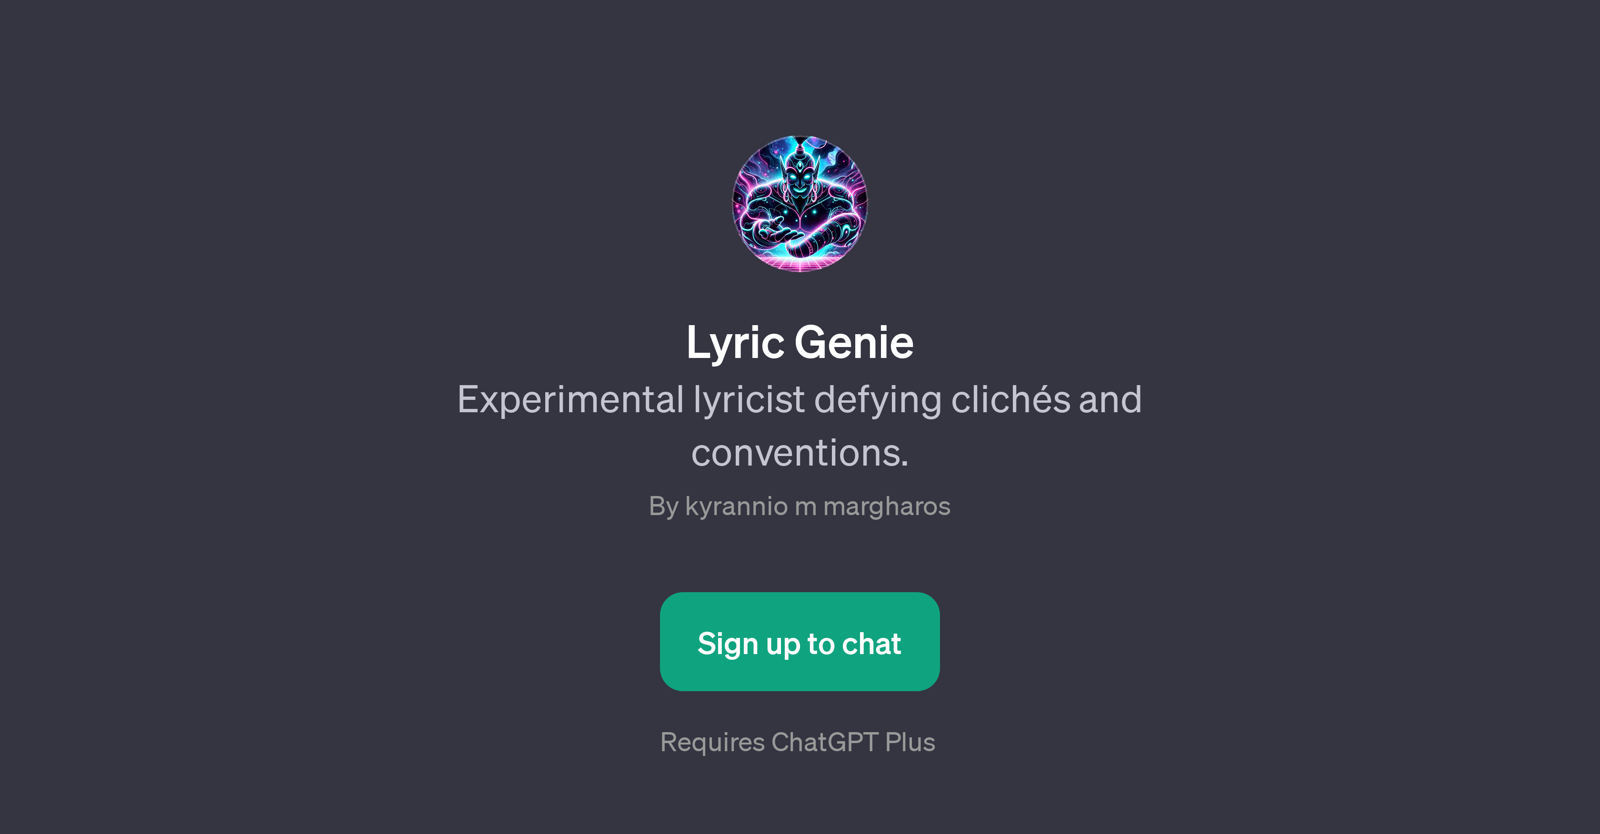 Lyric Genie website